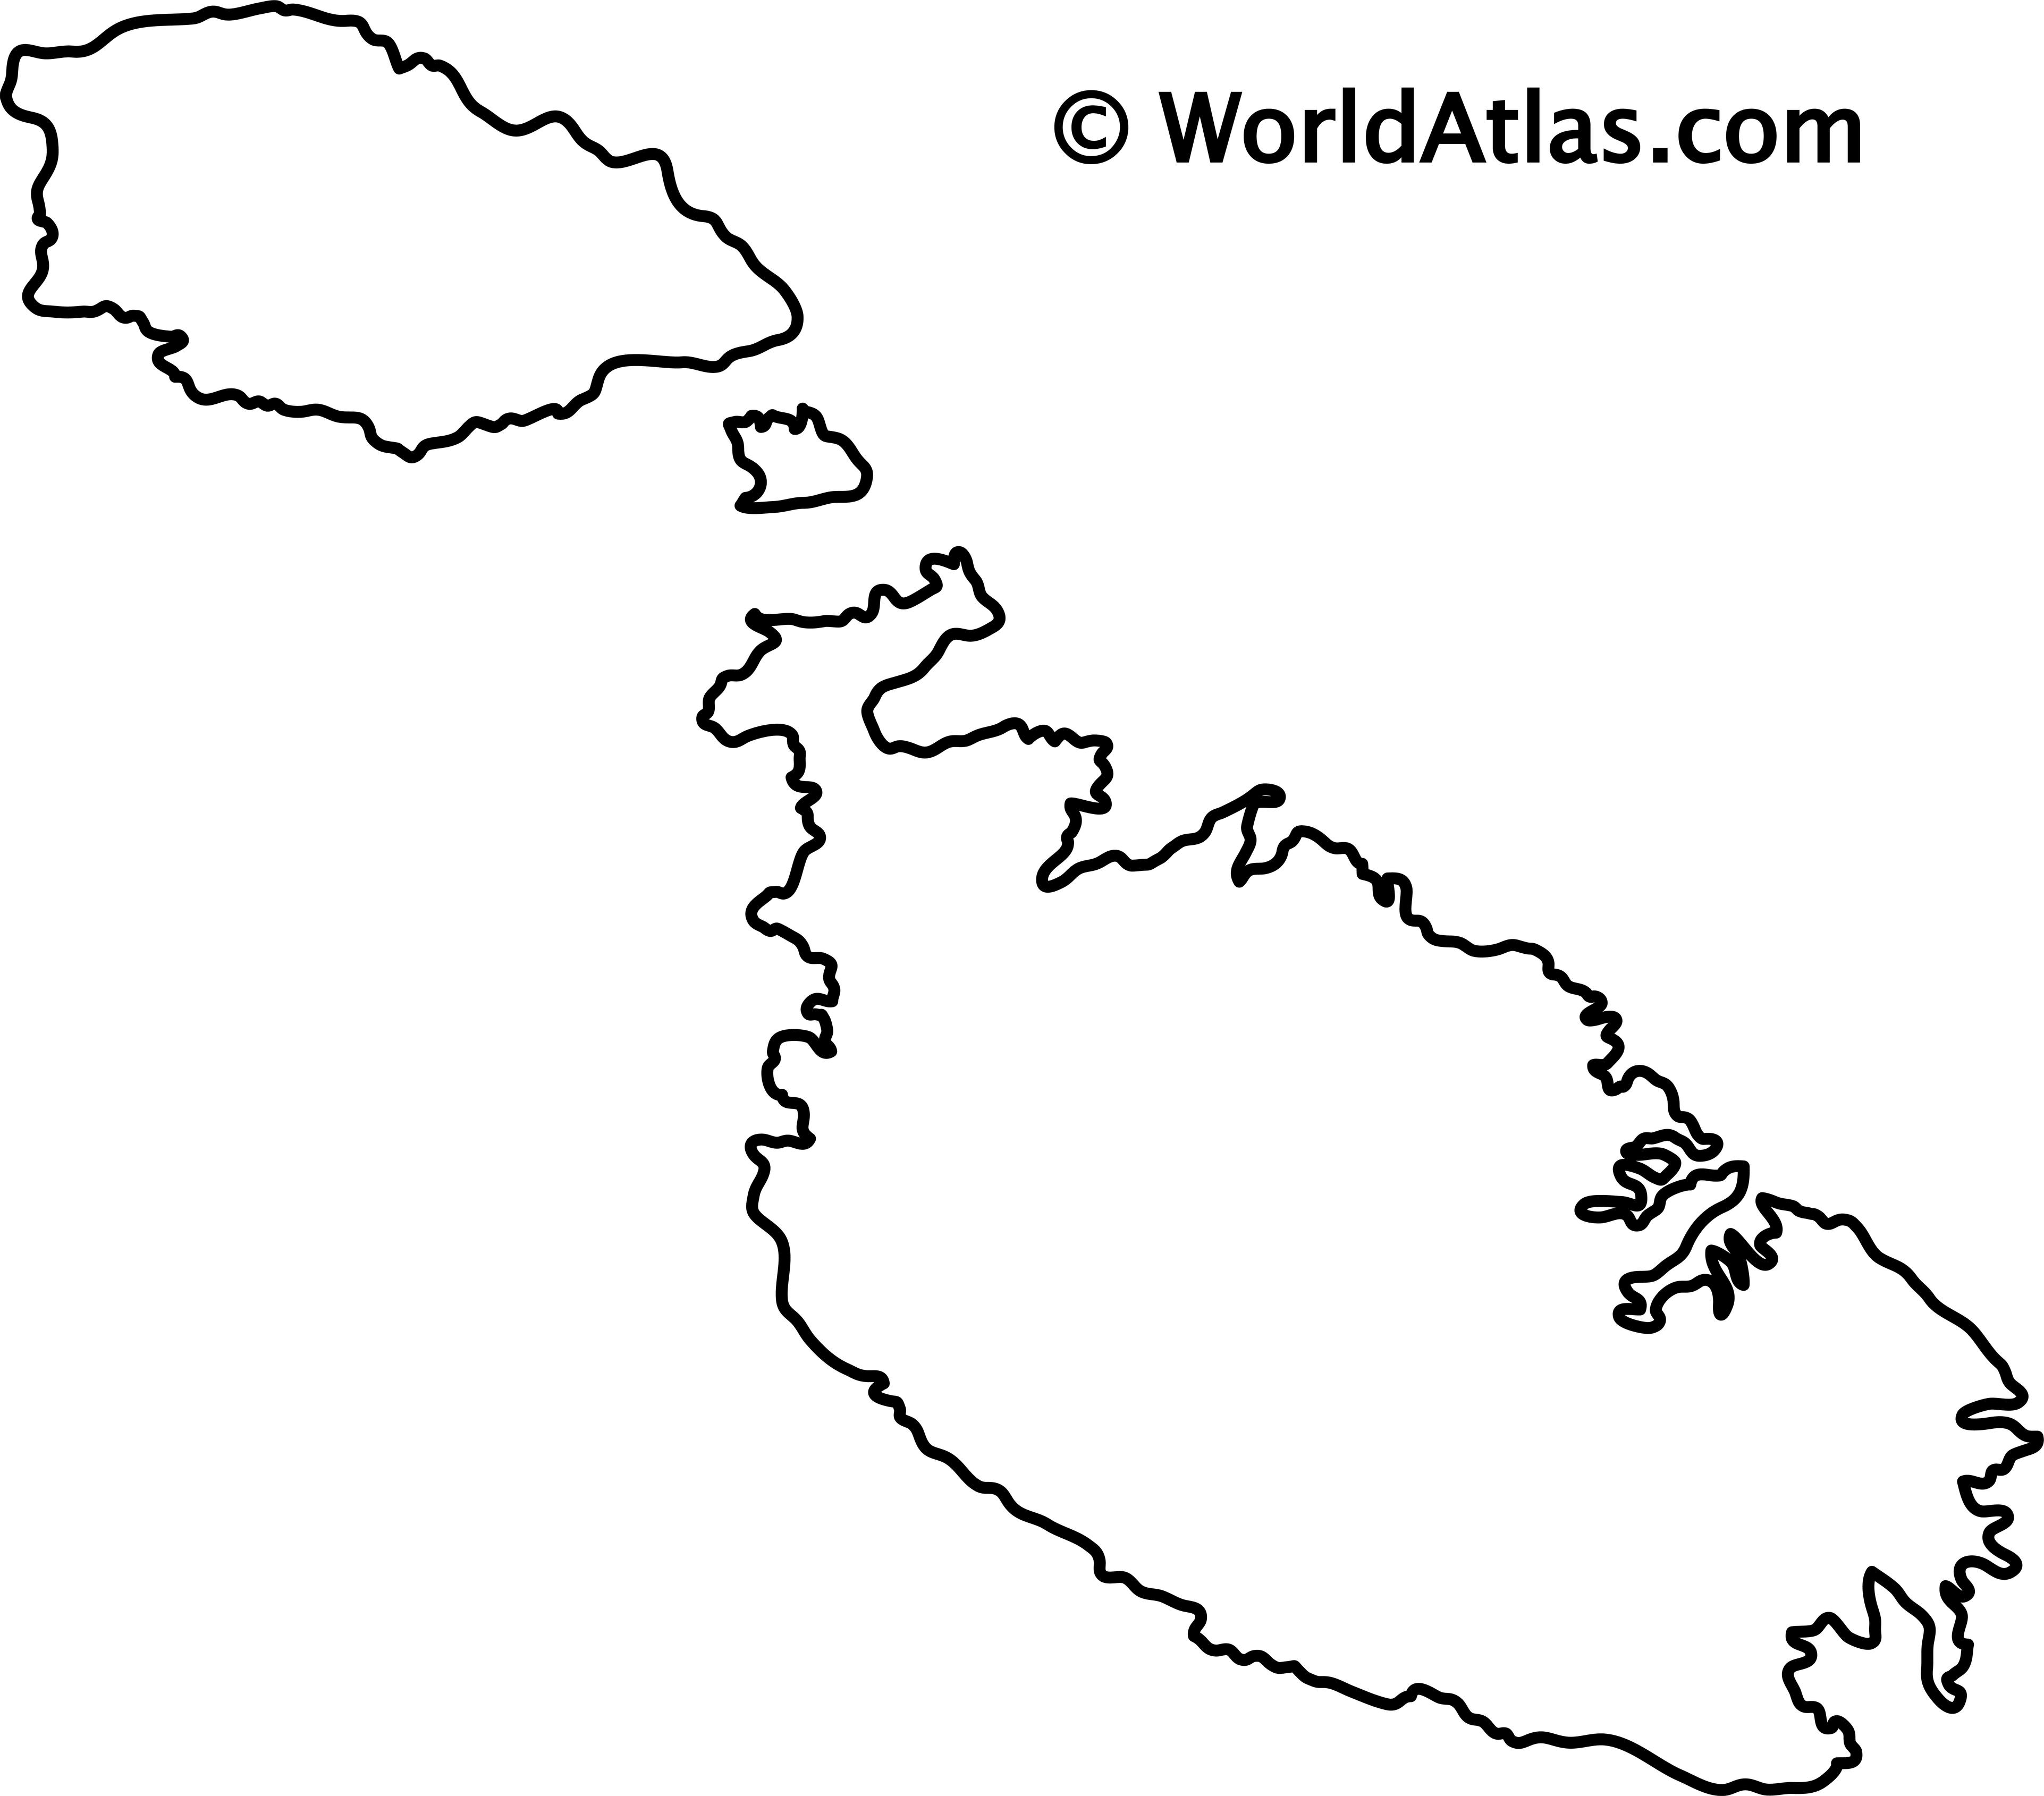 blank world atlas map. world atlas of map